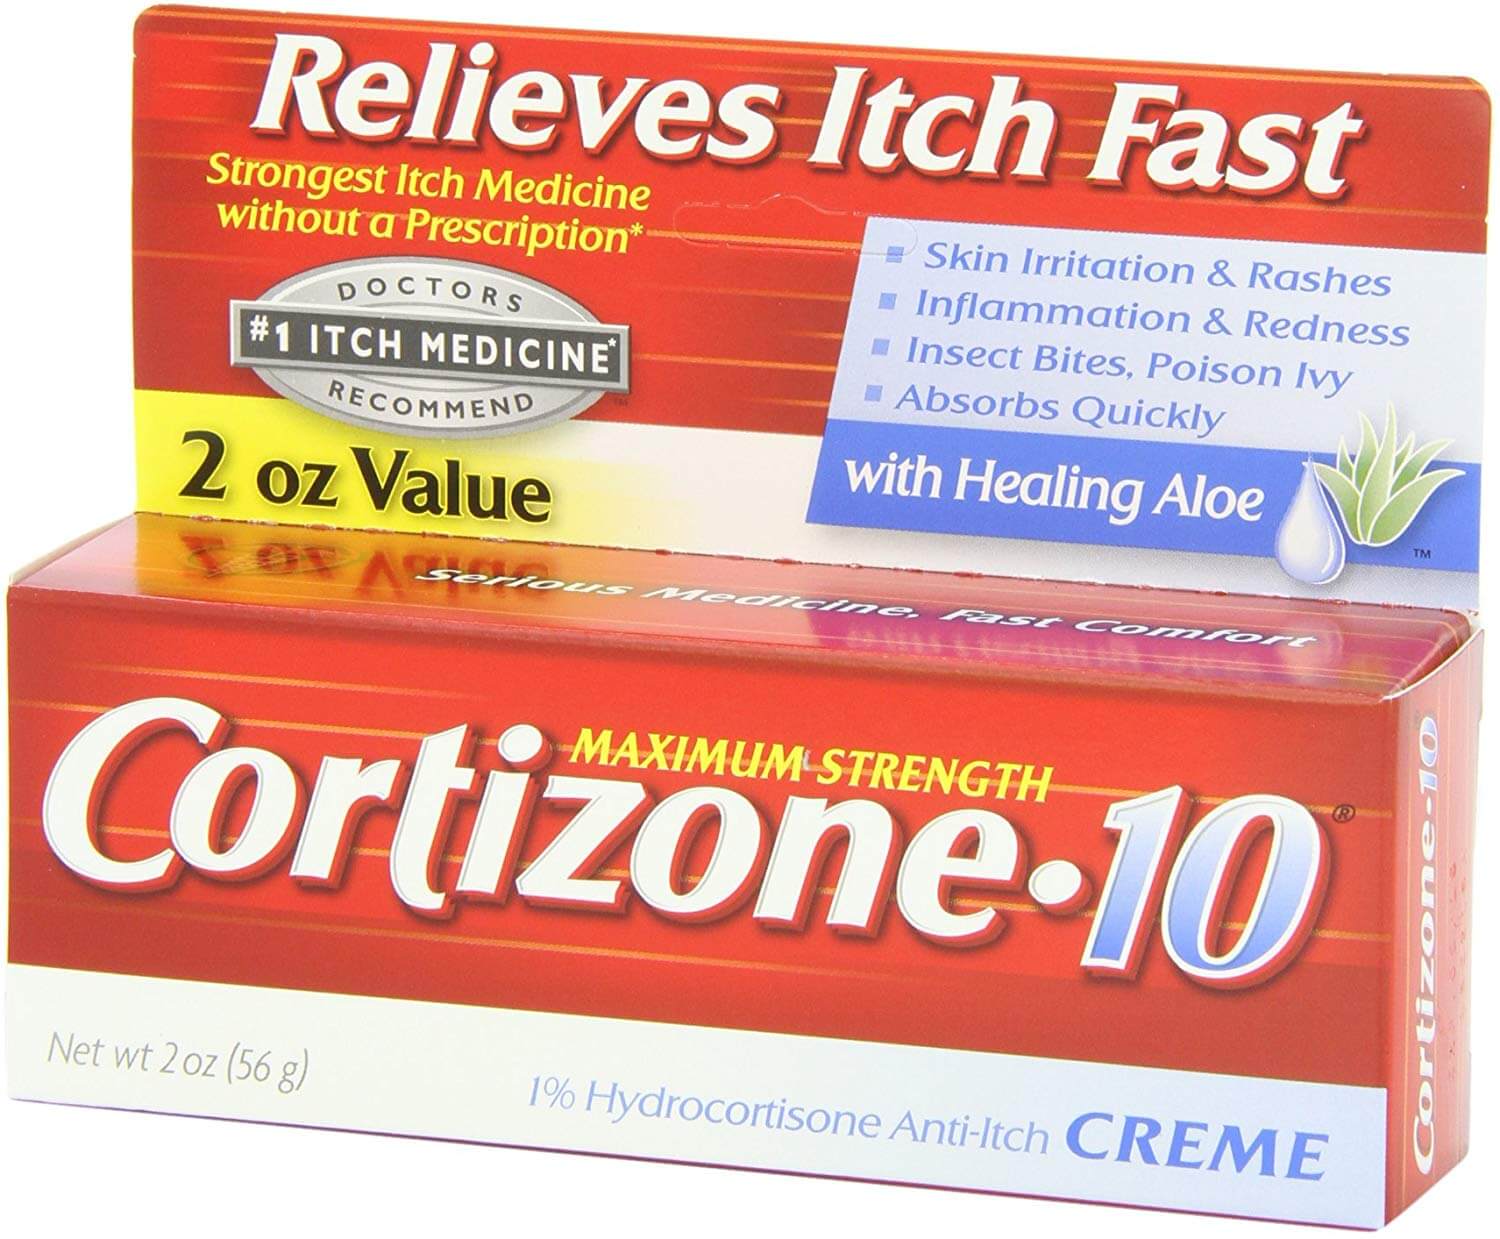 Cortizone-10 Maximum Strength